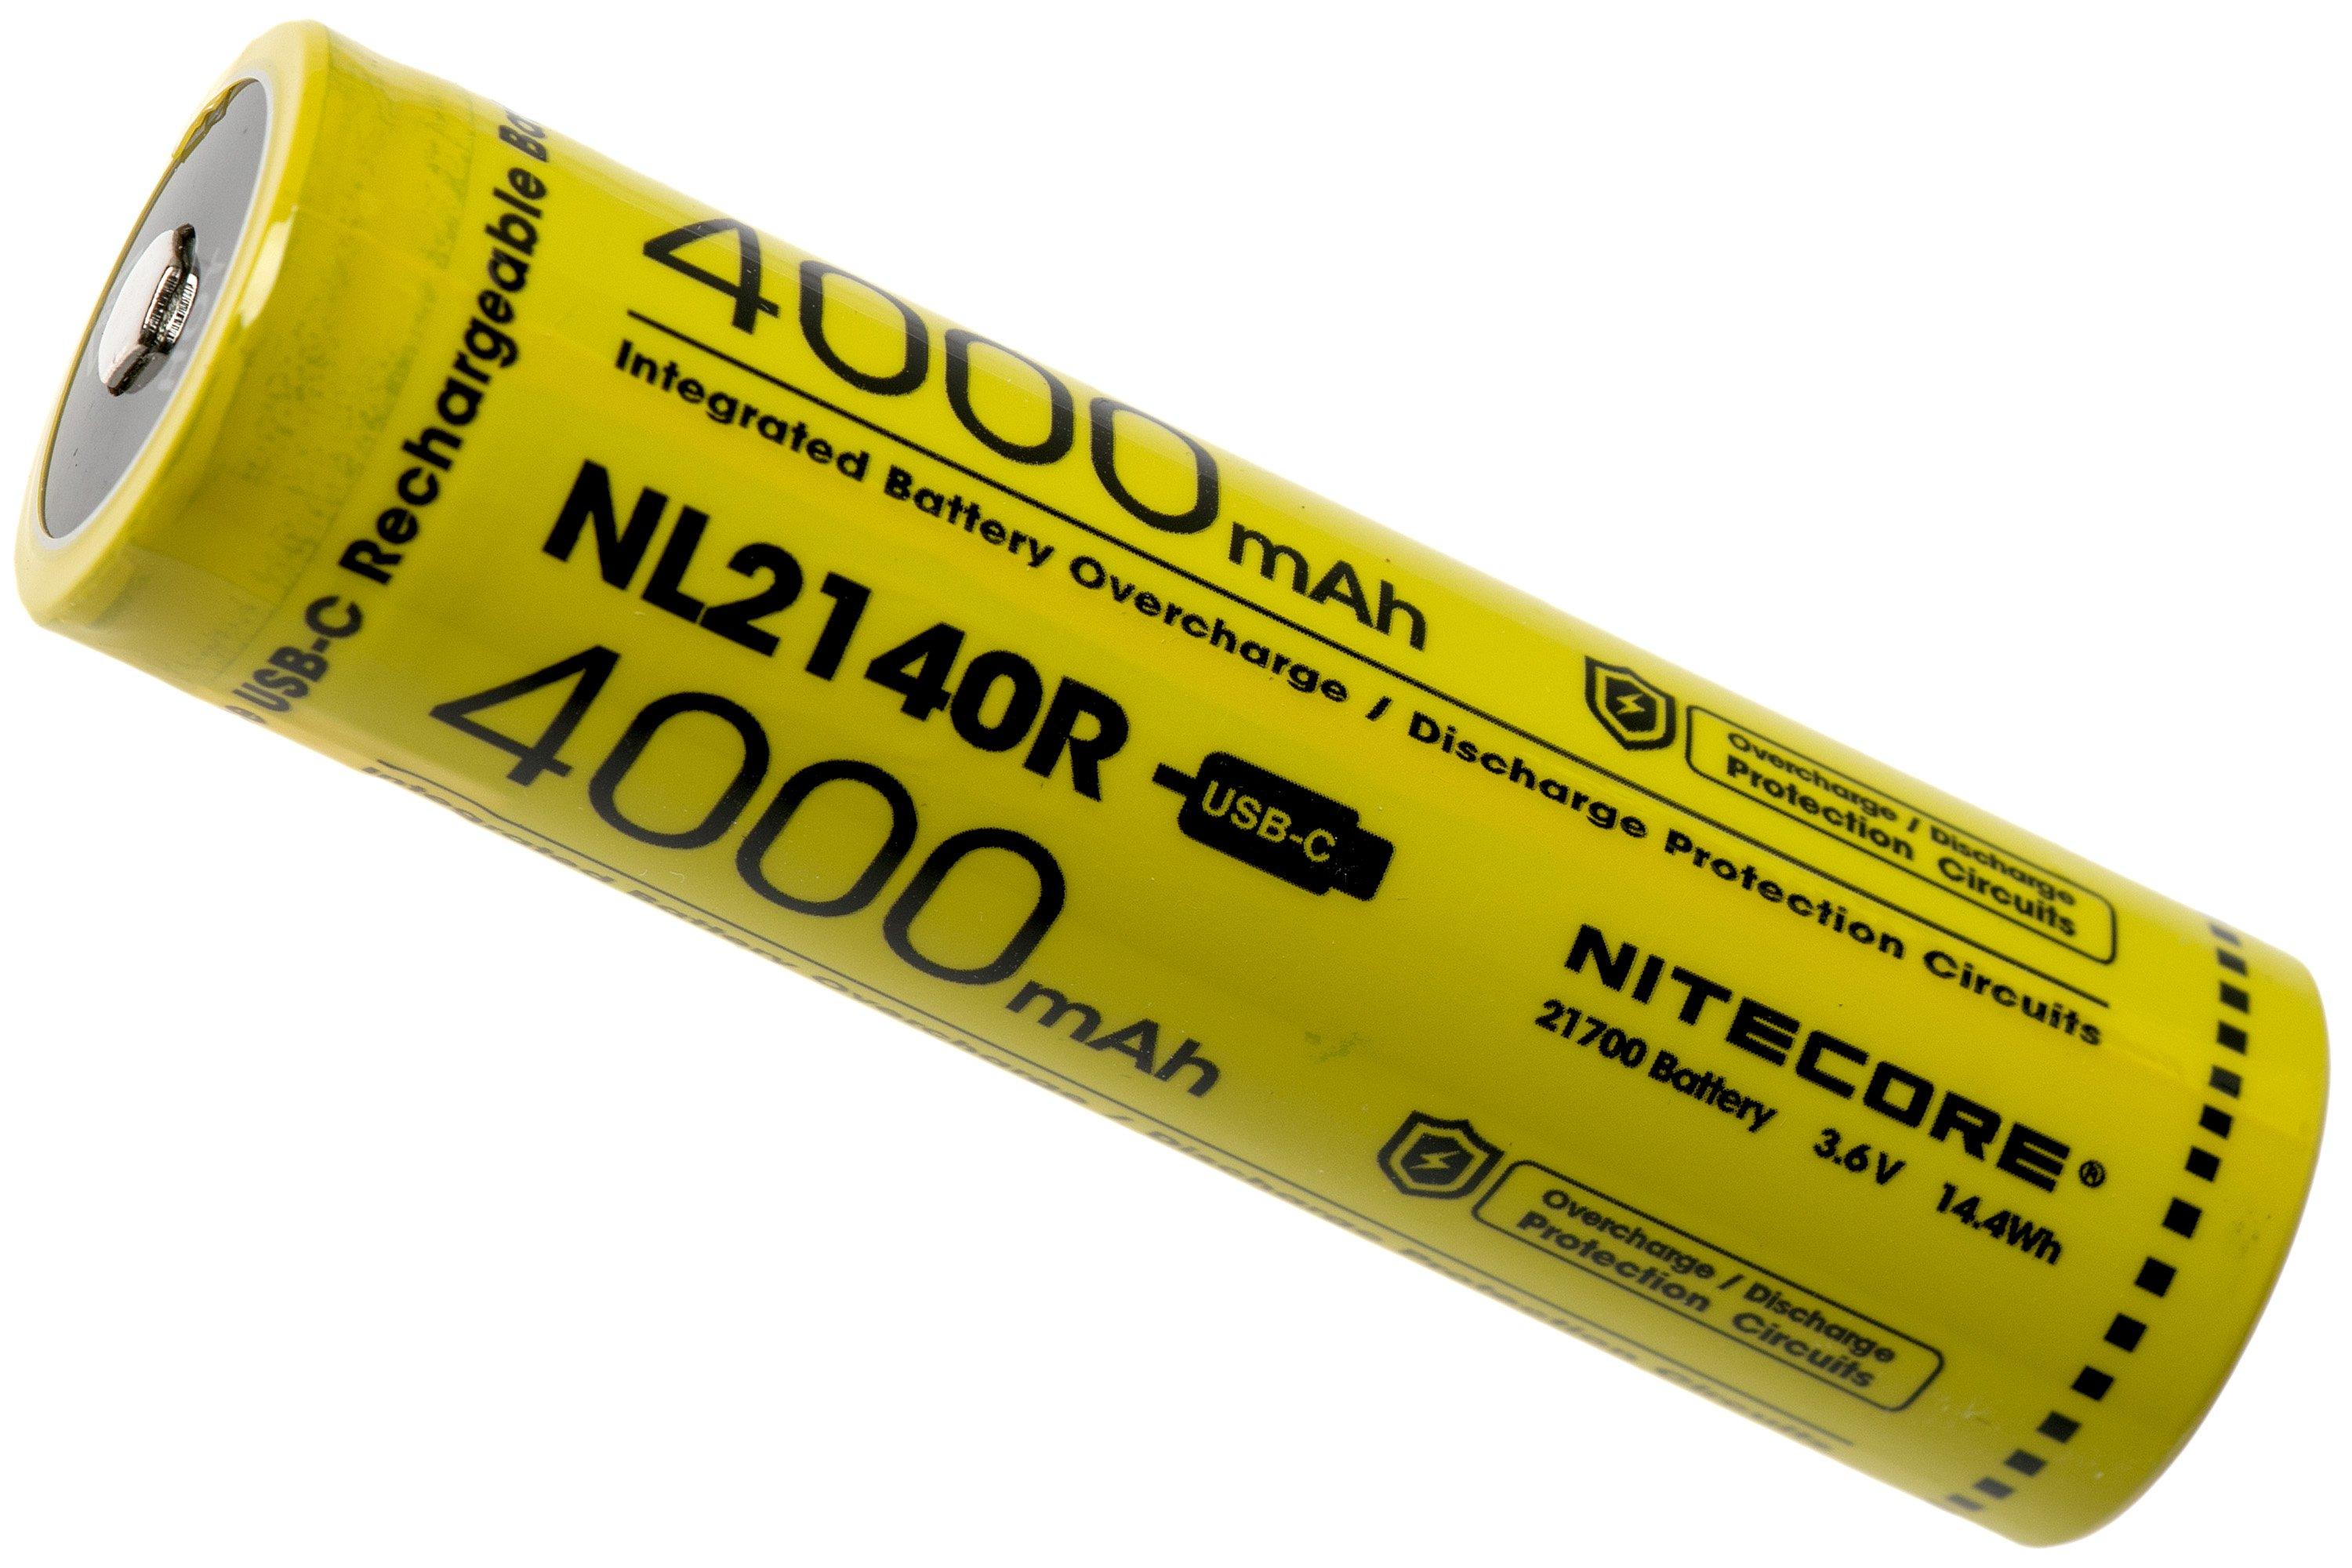 NITECORE PILE RECHARGEABLE NL2140R TYPE 21700 USB-C (4000MAH)